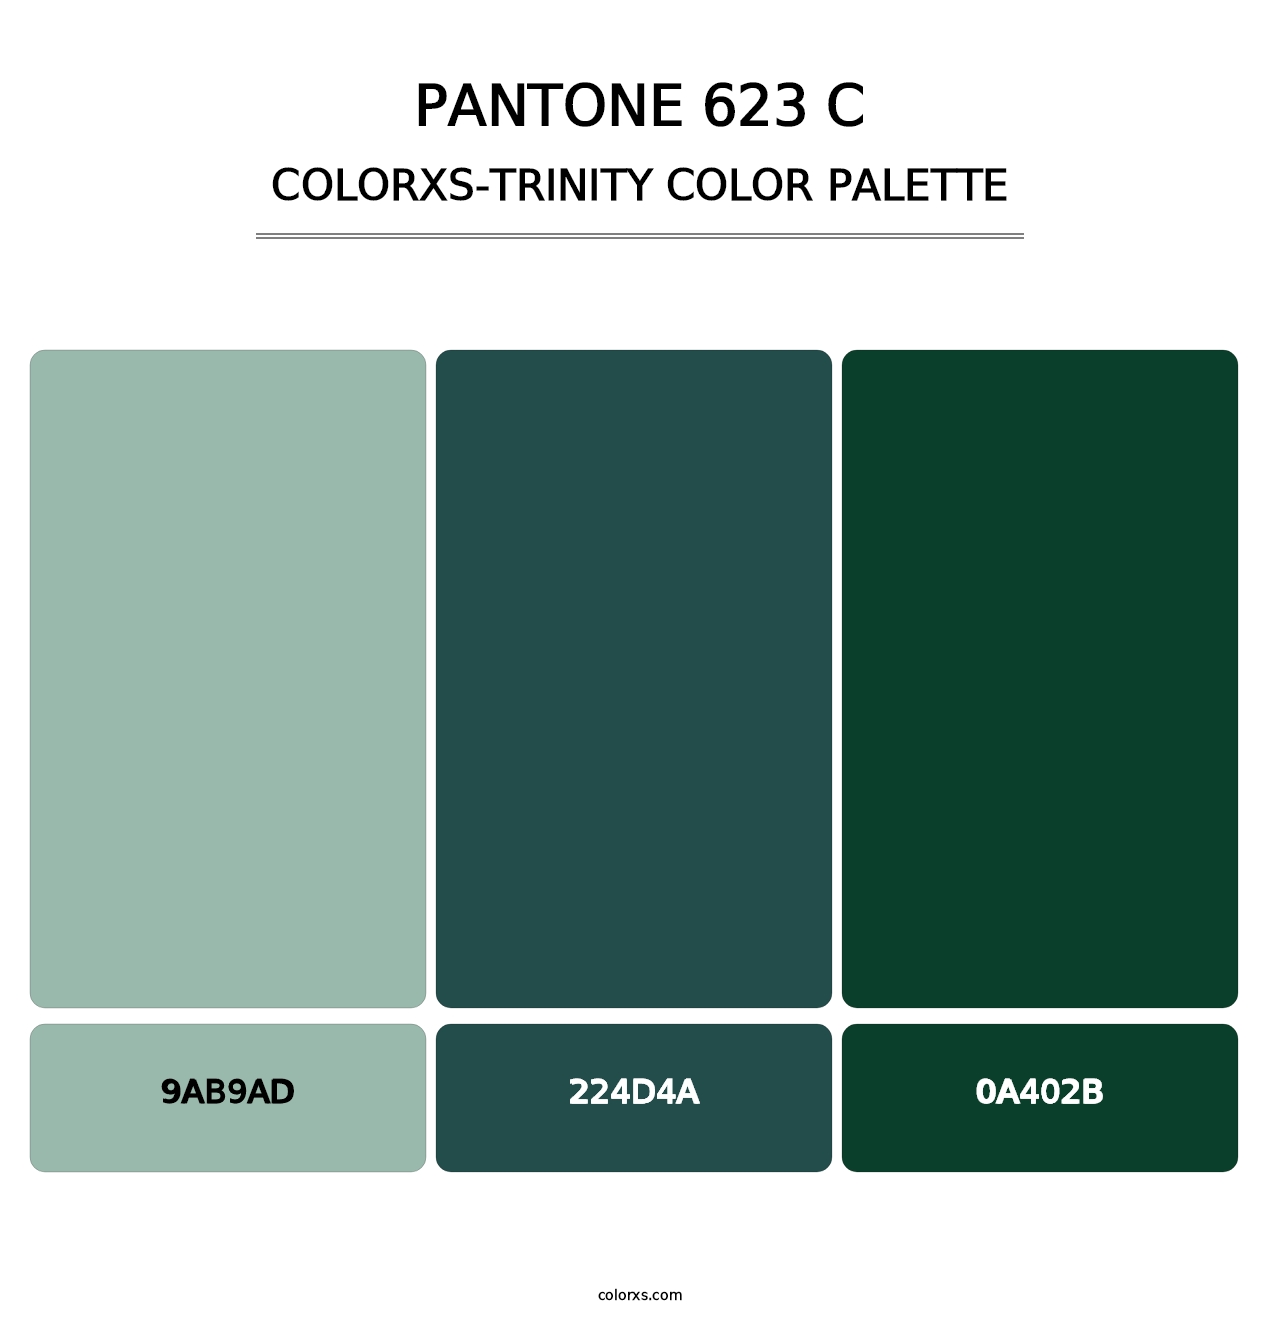 PANTONE 623 C - Colorxs Trinity Palette